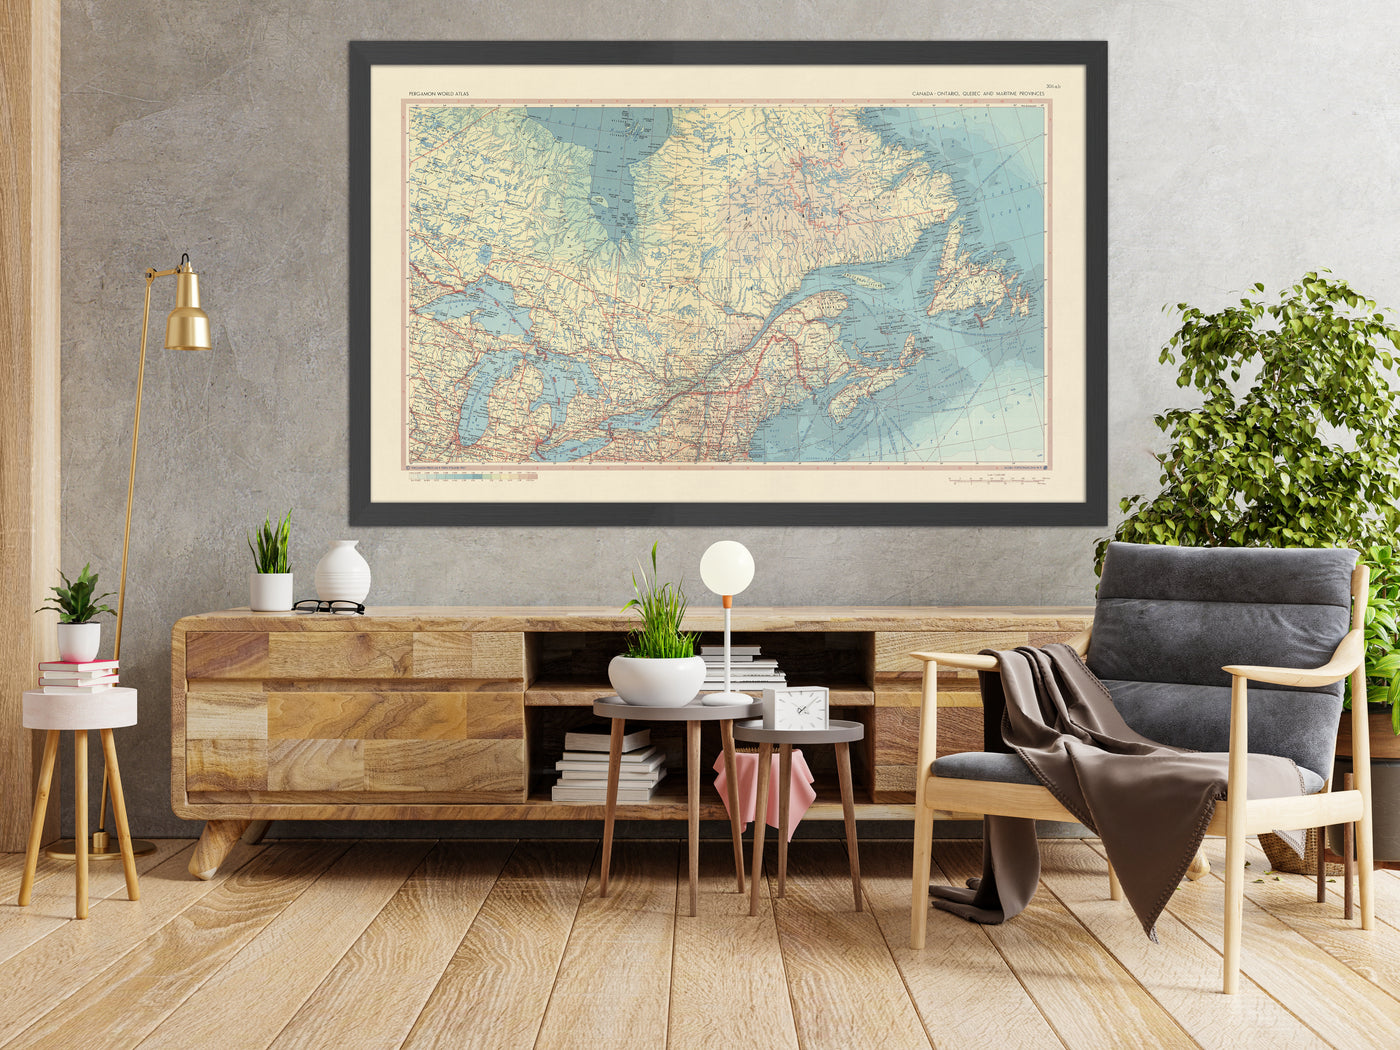 Old Map of Canada, 1967: Ontario, Quebec, Newfoundland, Labrador, Nova Scotia, Great Lakes